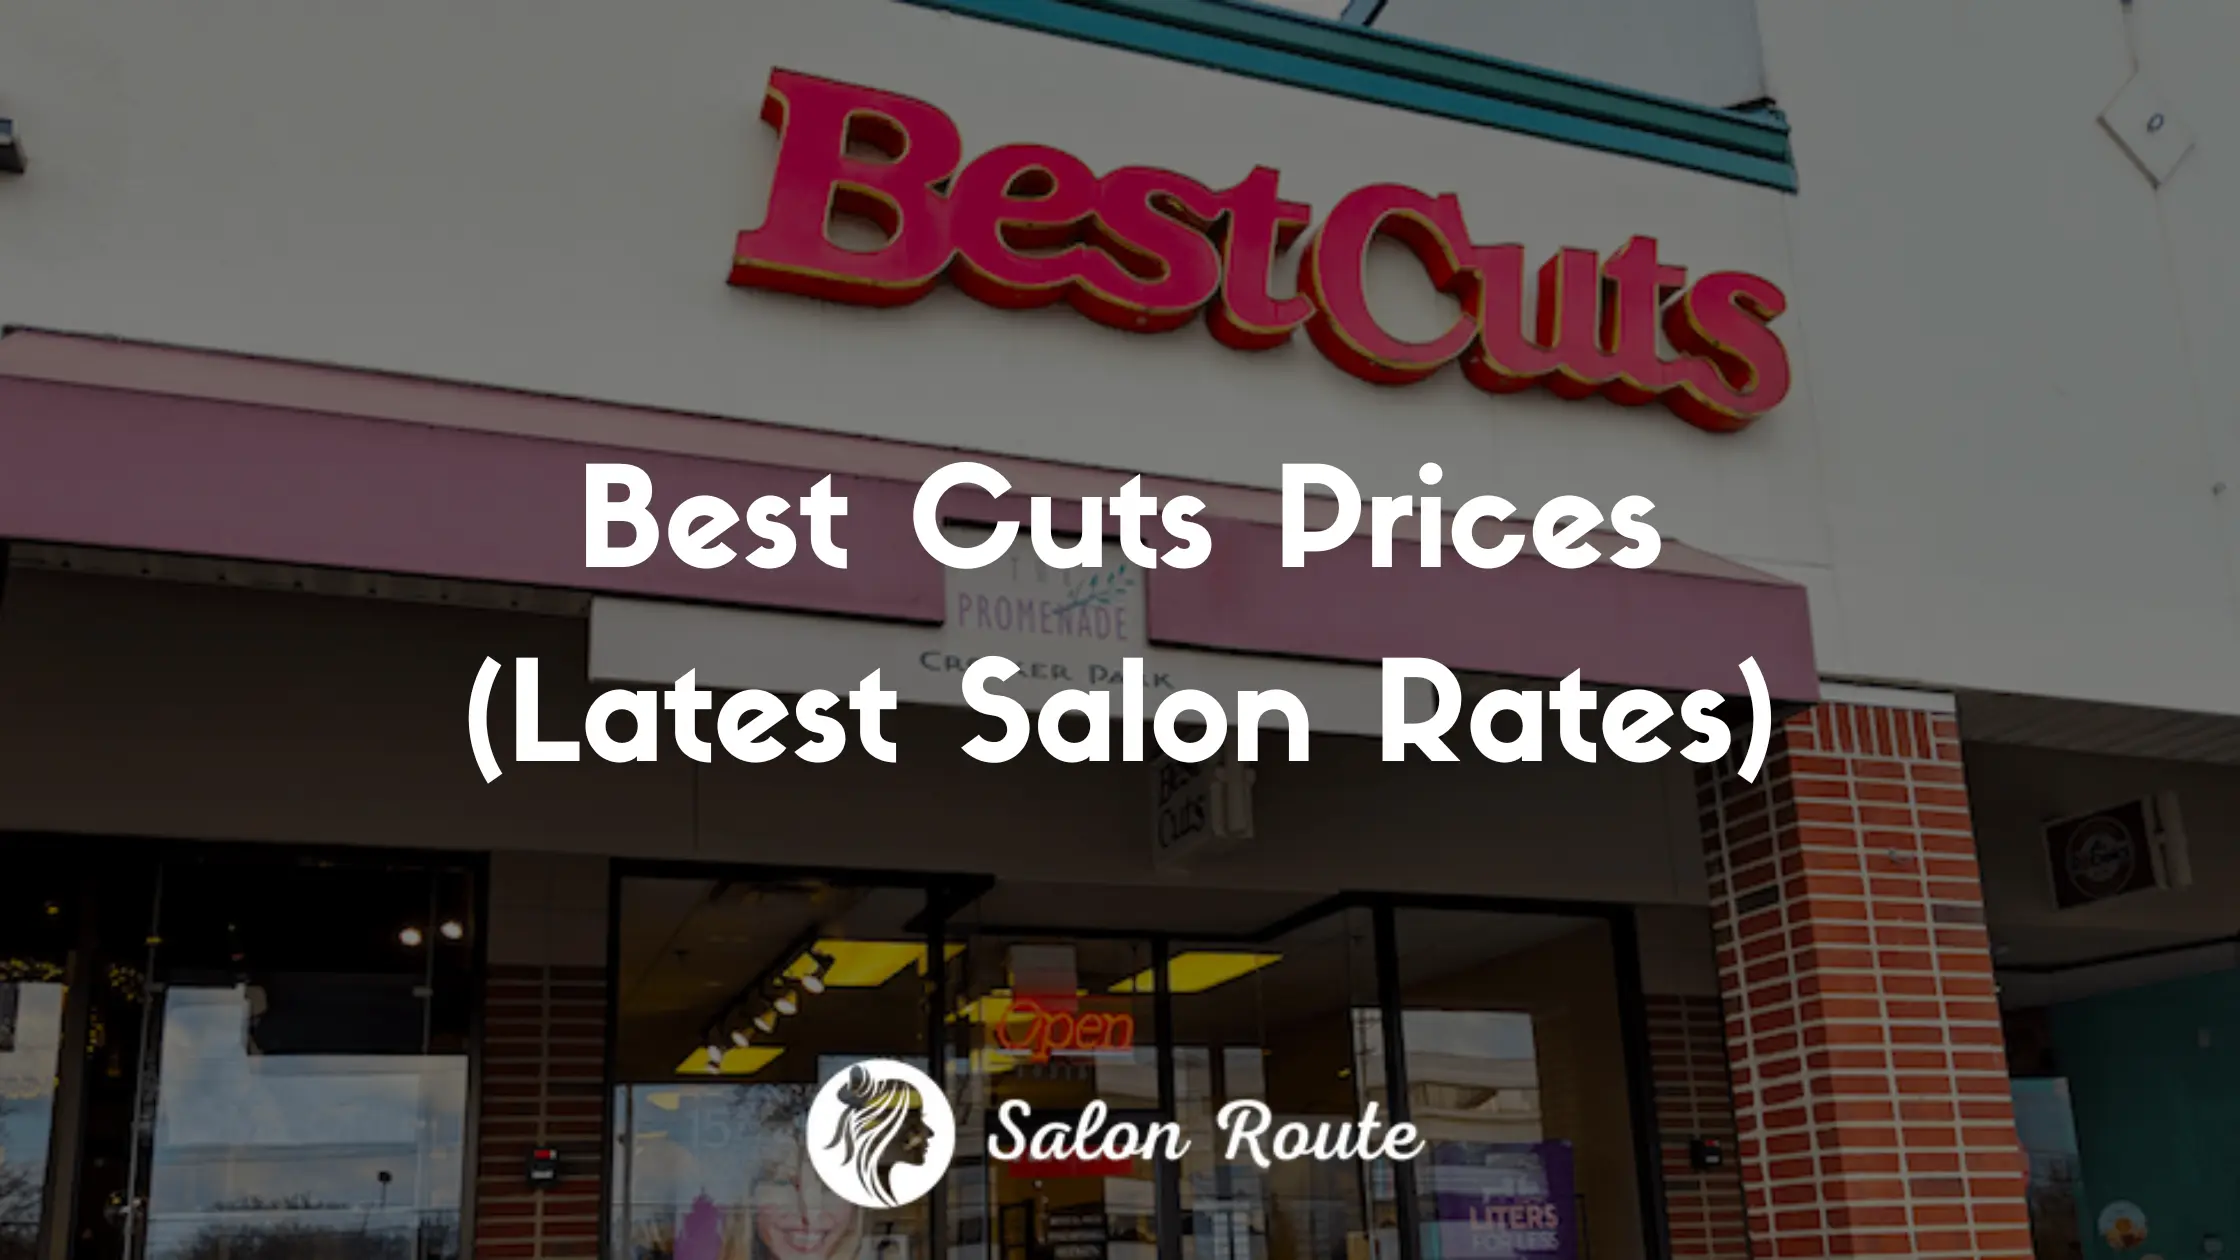 Best Cuts Prices (Latest Salon Rates)